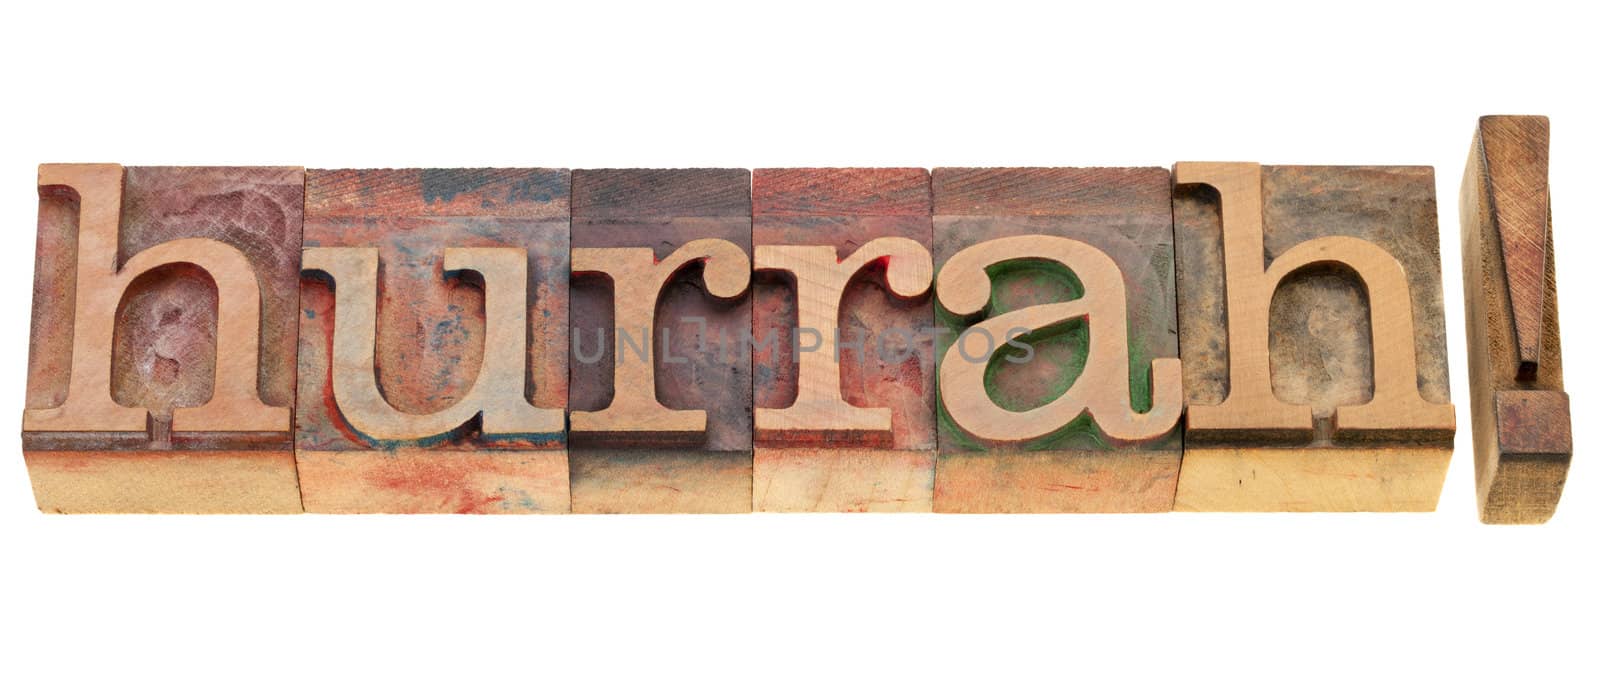 hurrah - isolated exclamation word in vintage wood letterpress printing blocks